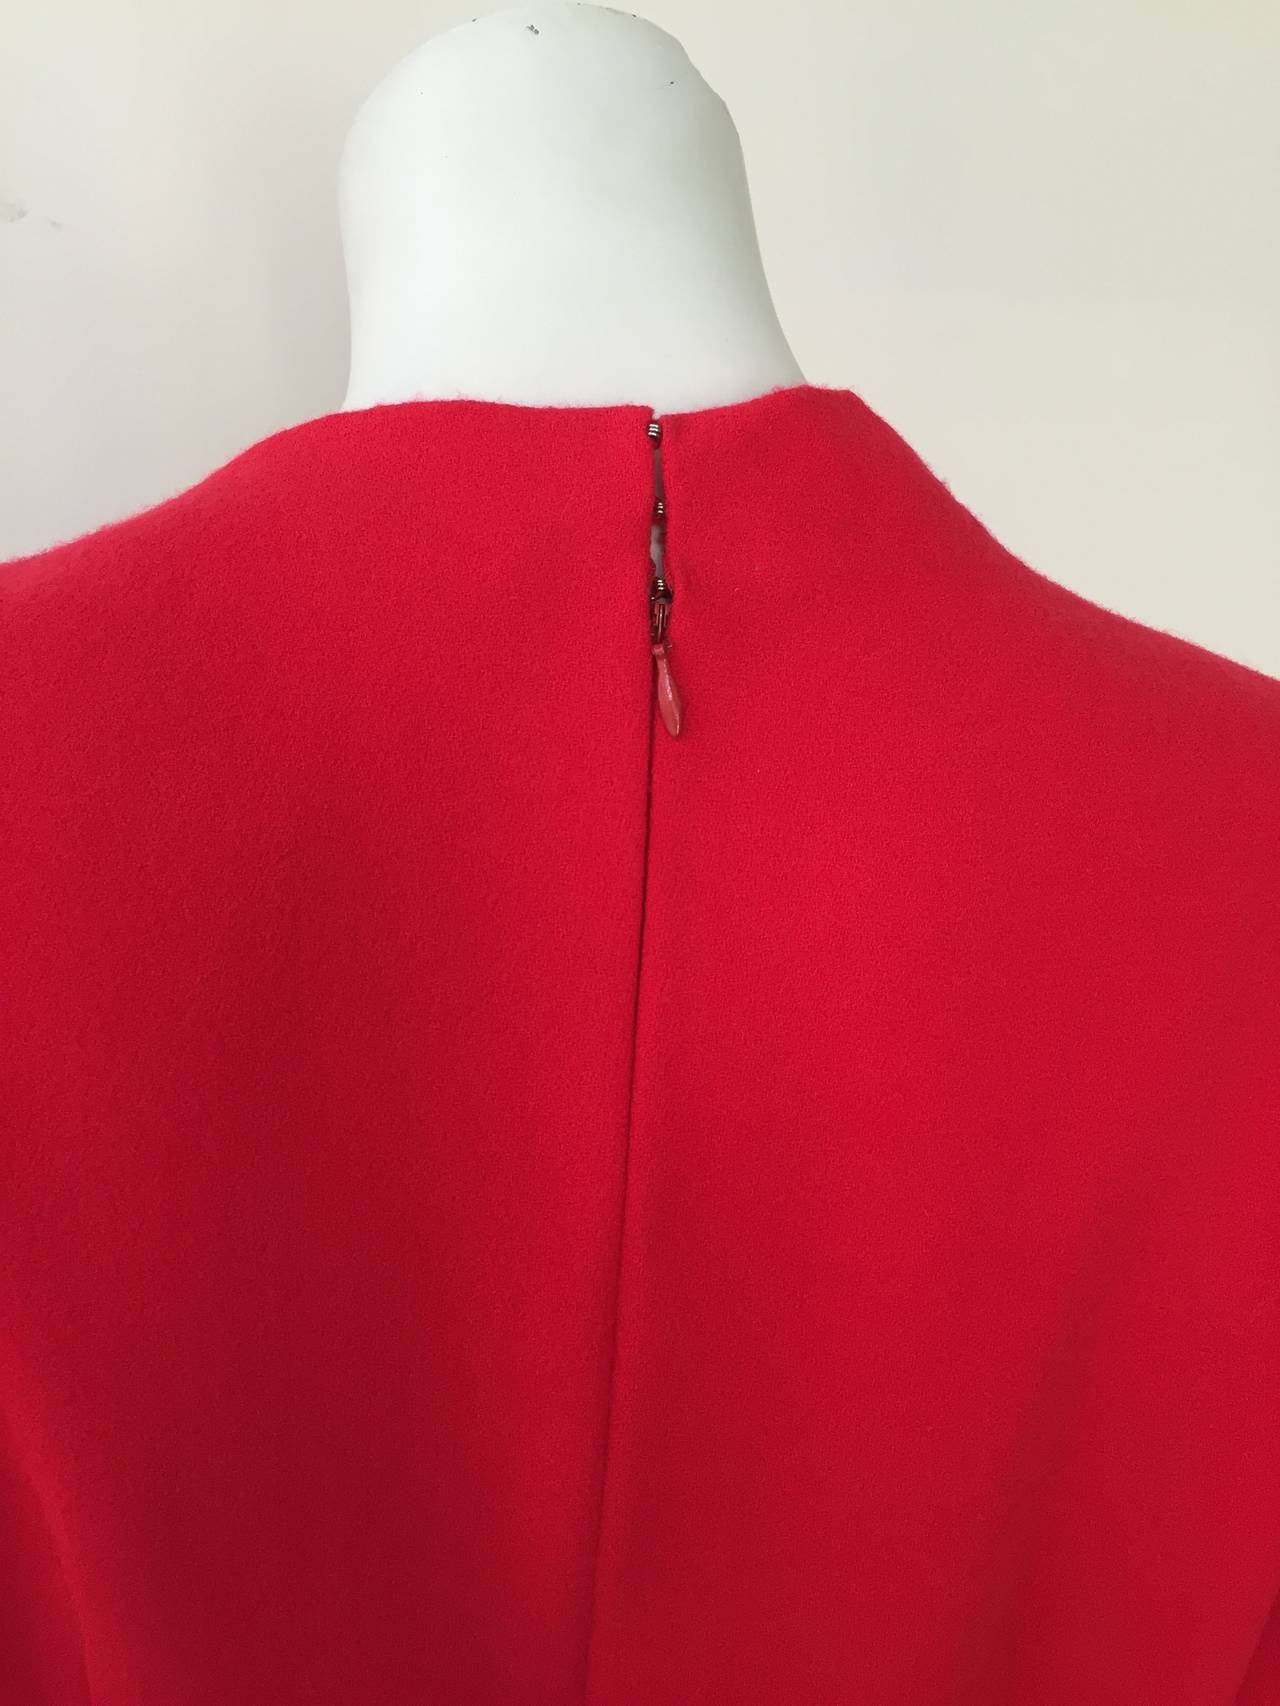 Bill Blass 1970s Red Wool Dress Size 10 / 12. For Sale 4